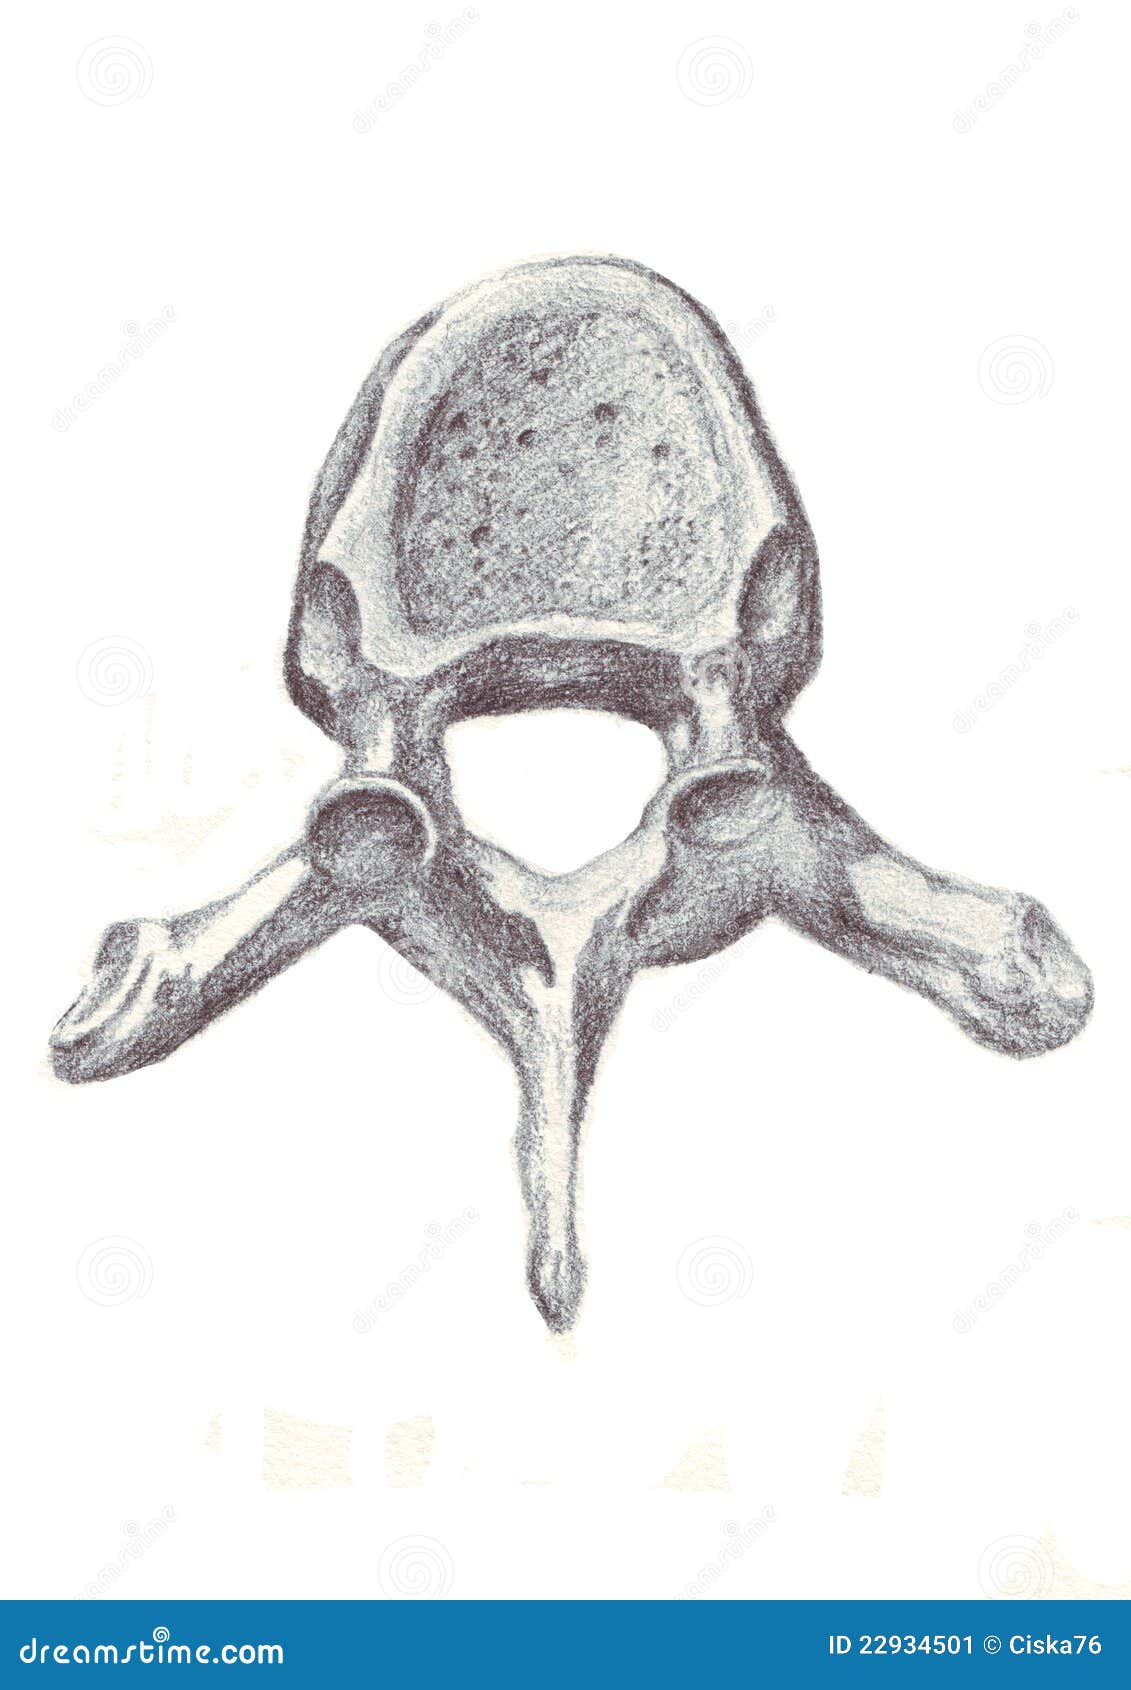 human anatomy - vertebra